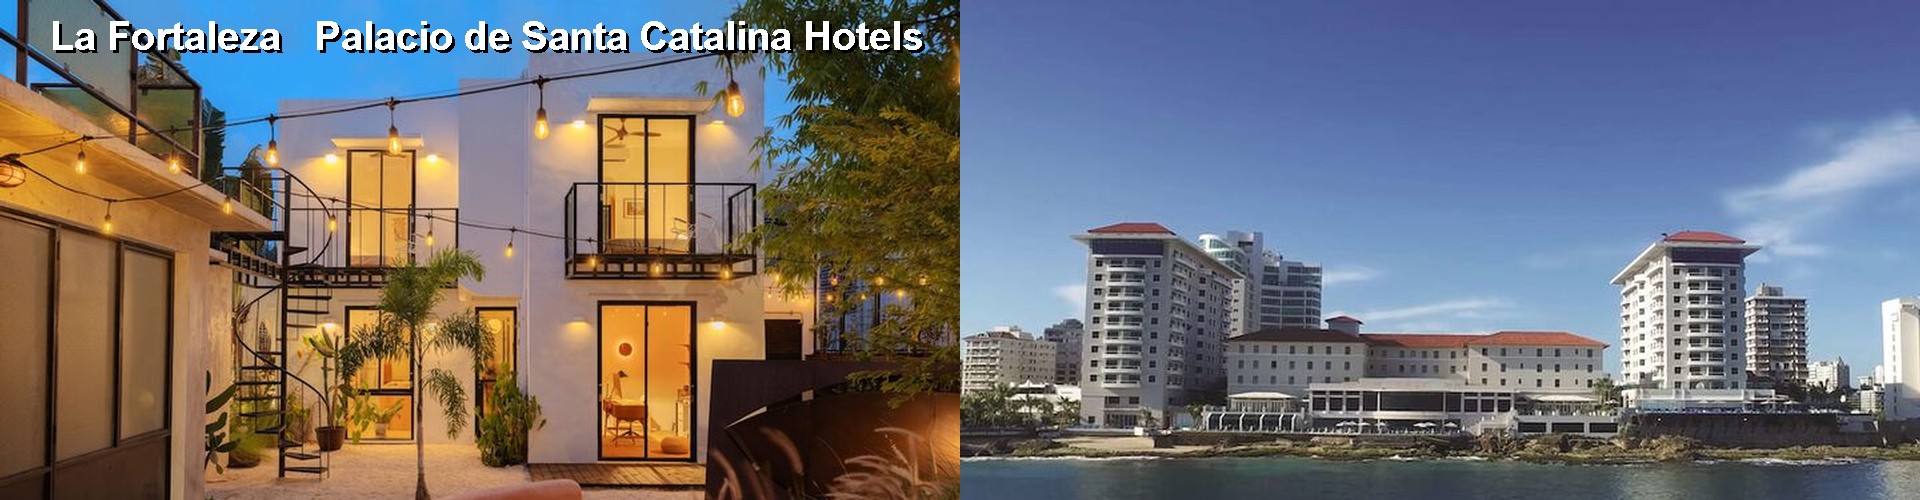 4 Best Hotels near La Fortaleza   Palacio de Santa Catalina